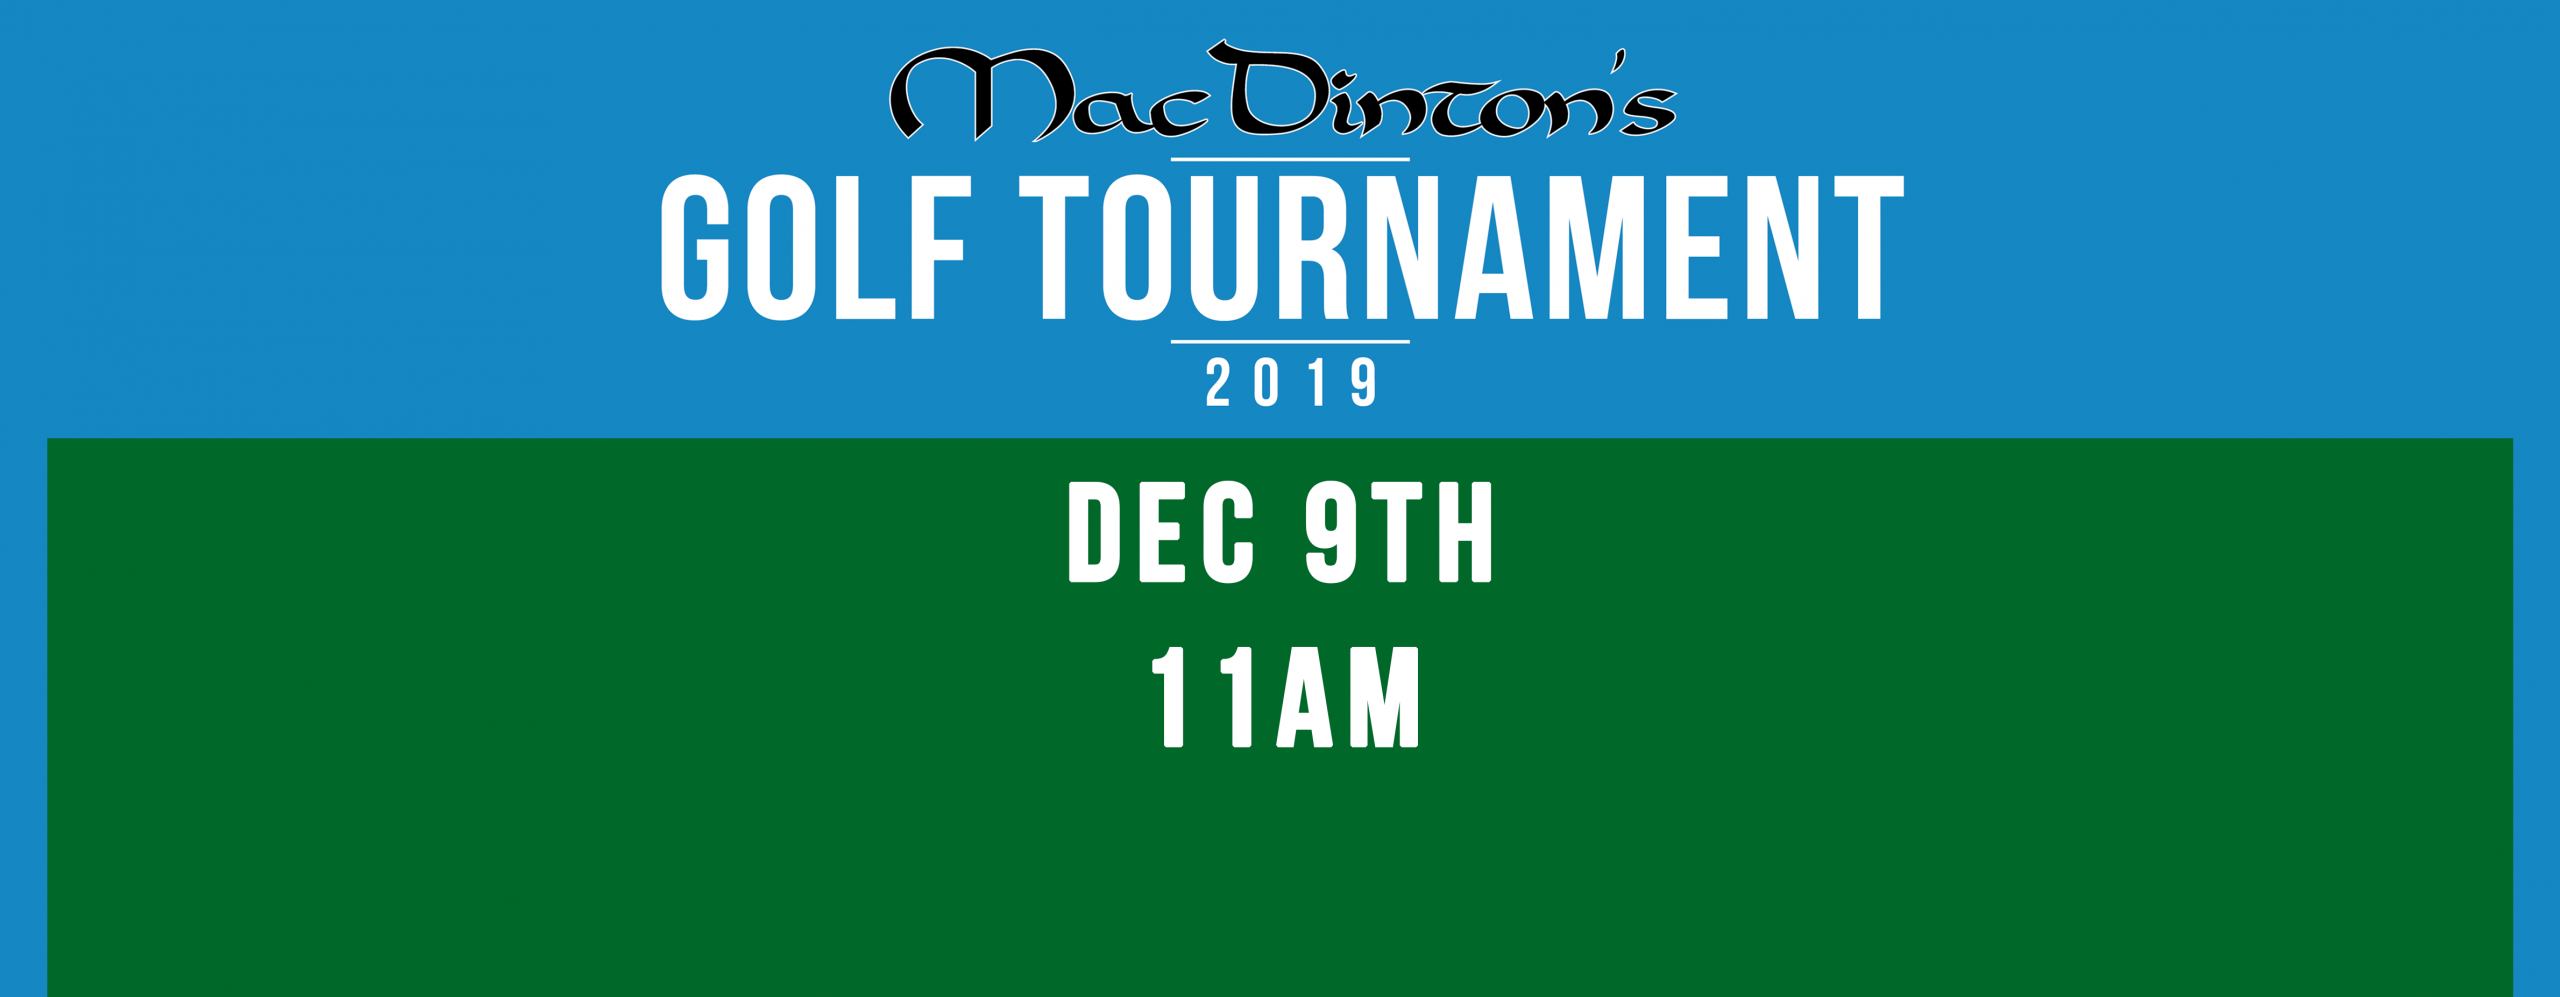 MacDinton's Annual Golf Tournament 2019